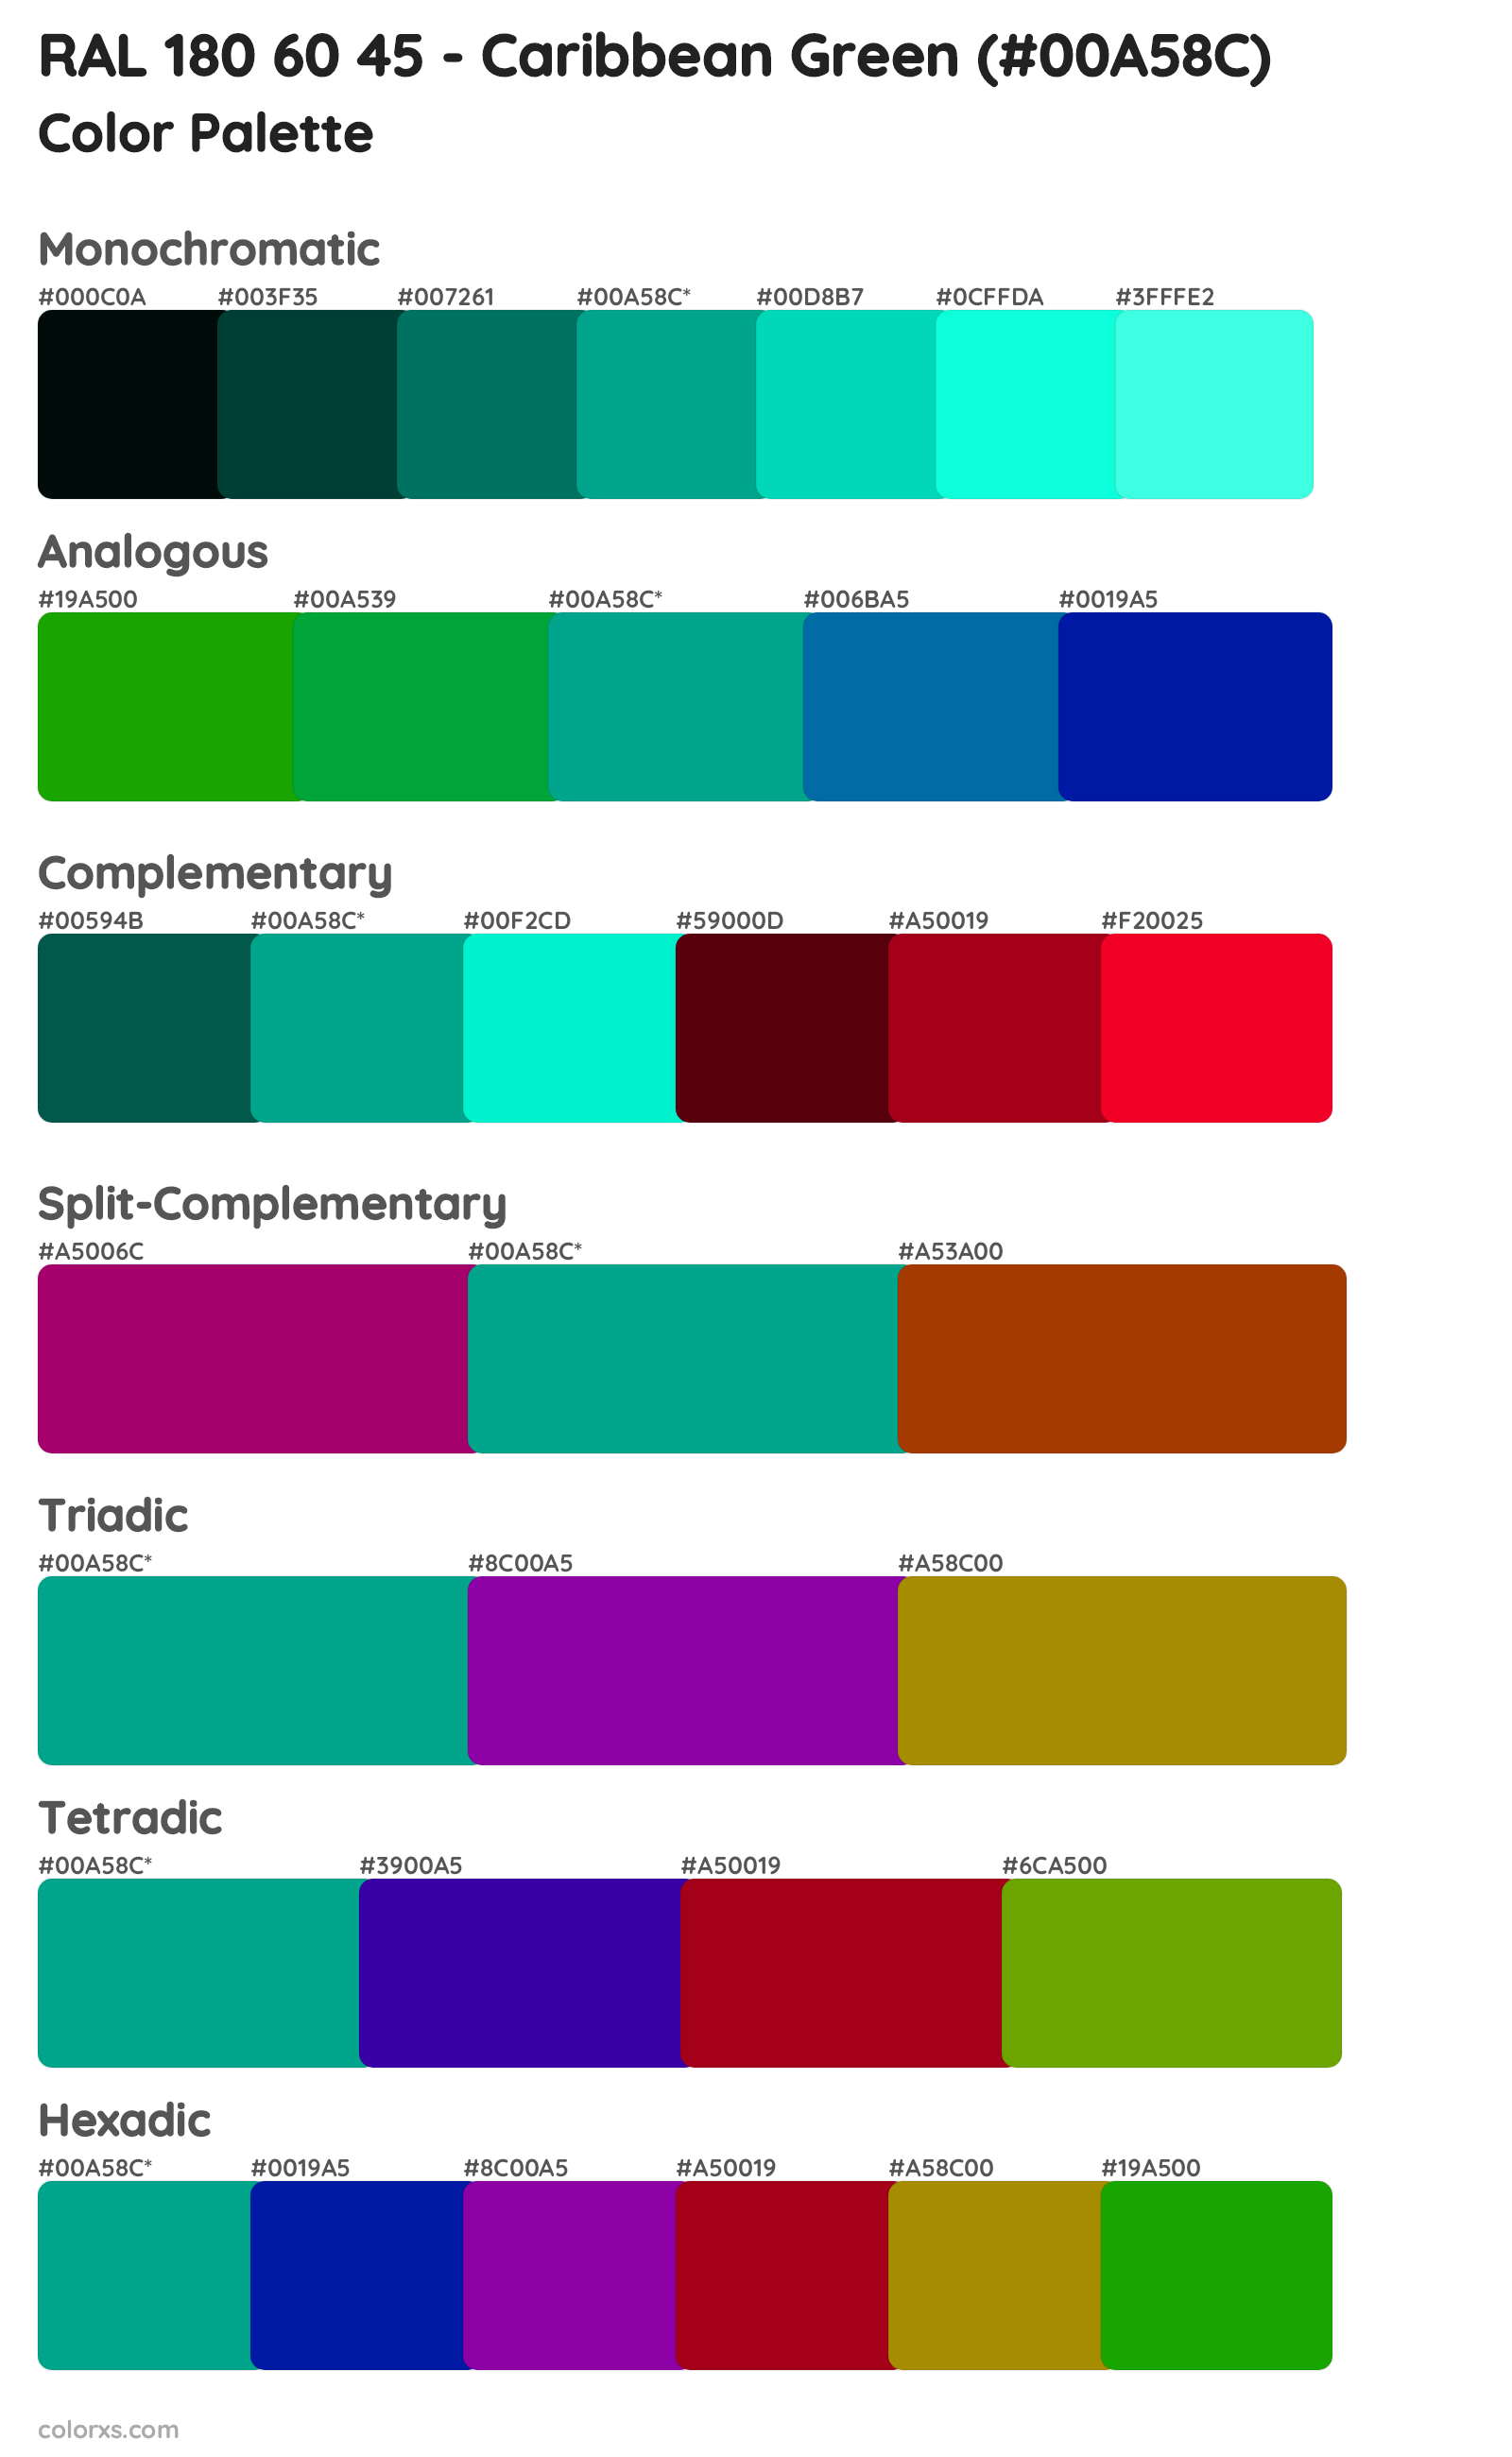 RAL 180 60 45 - Caribbean Green Color Scheme Palettes